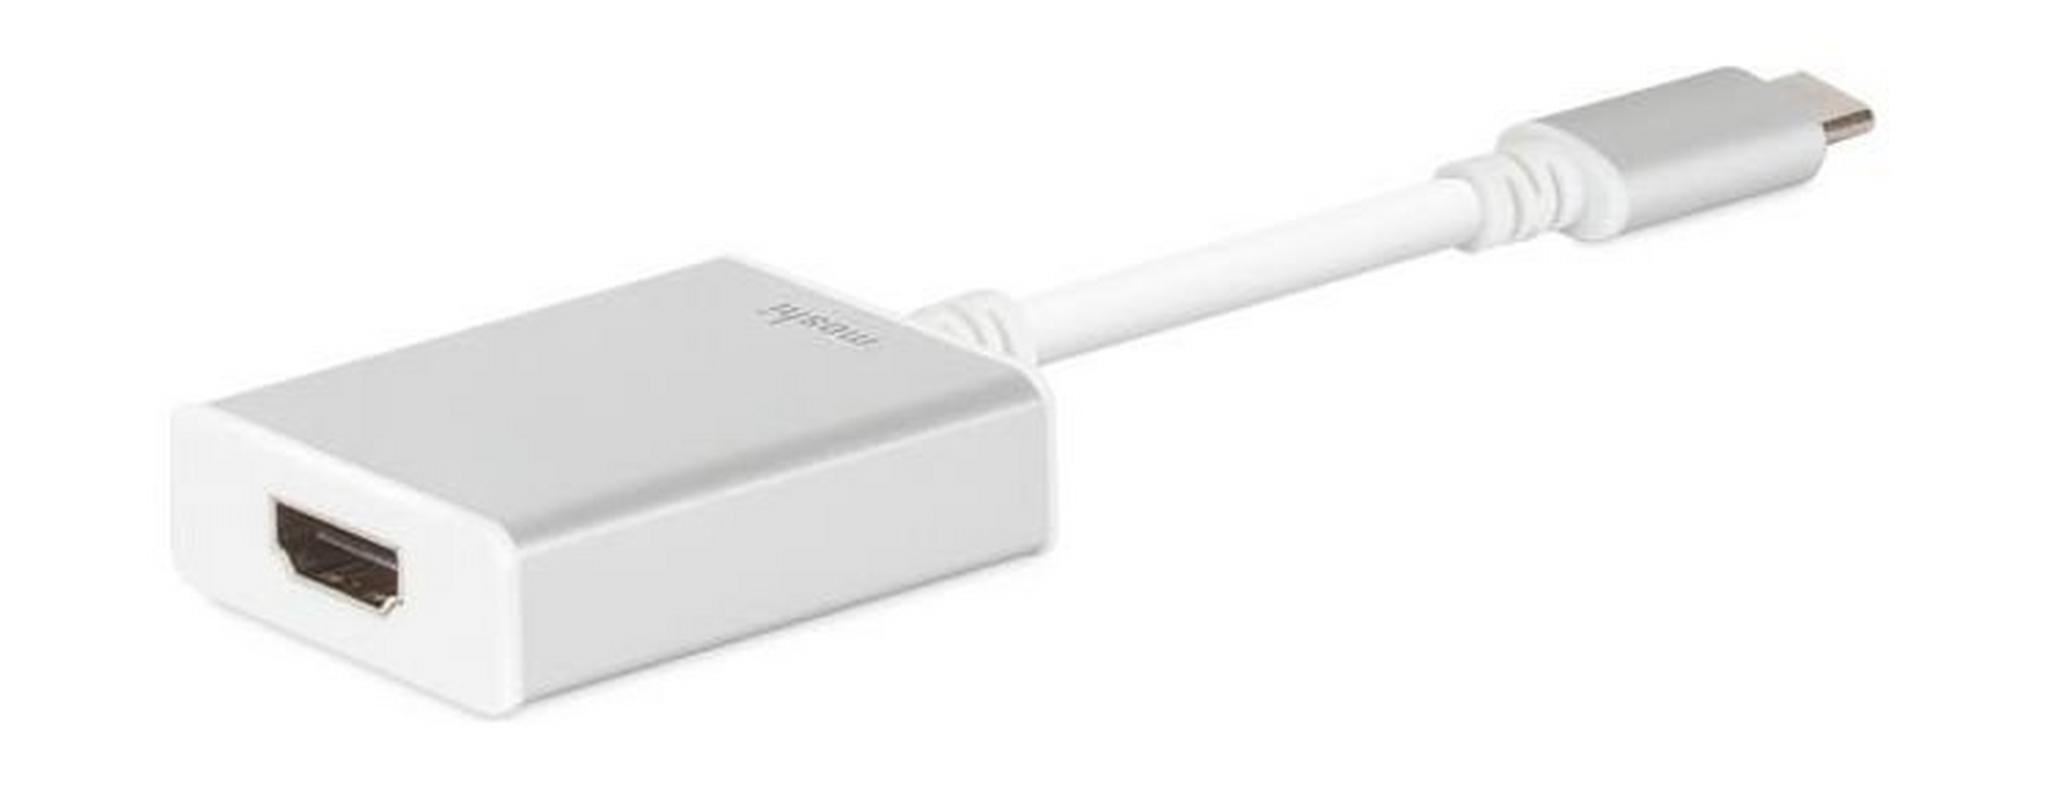 Moshi USB-C To HDMI Adapter (99MO084202) – Silver